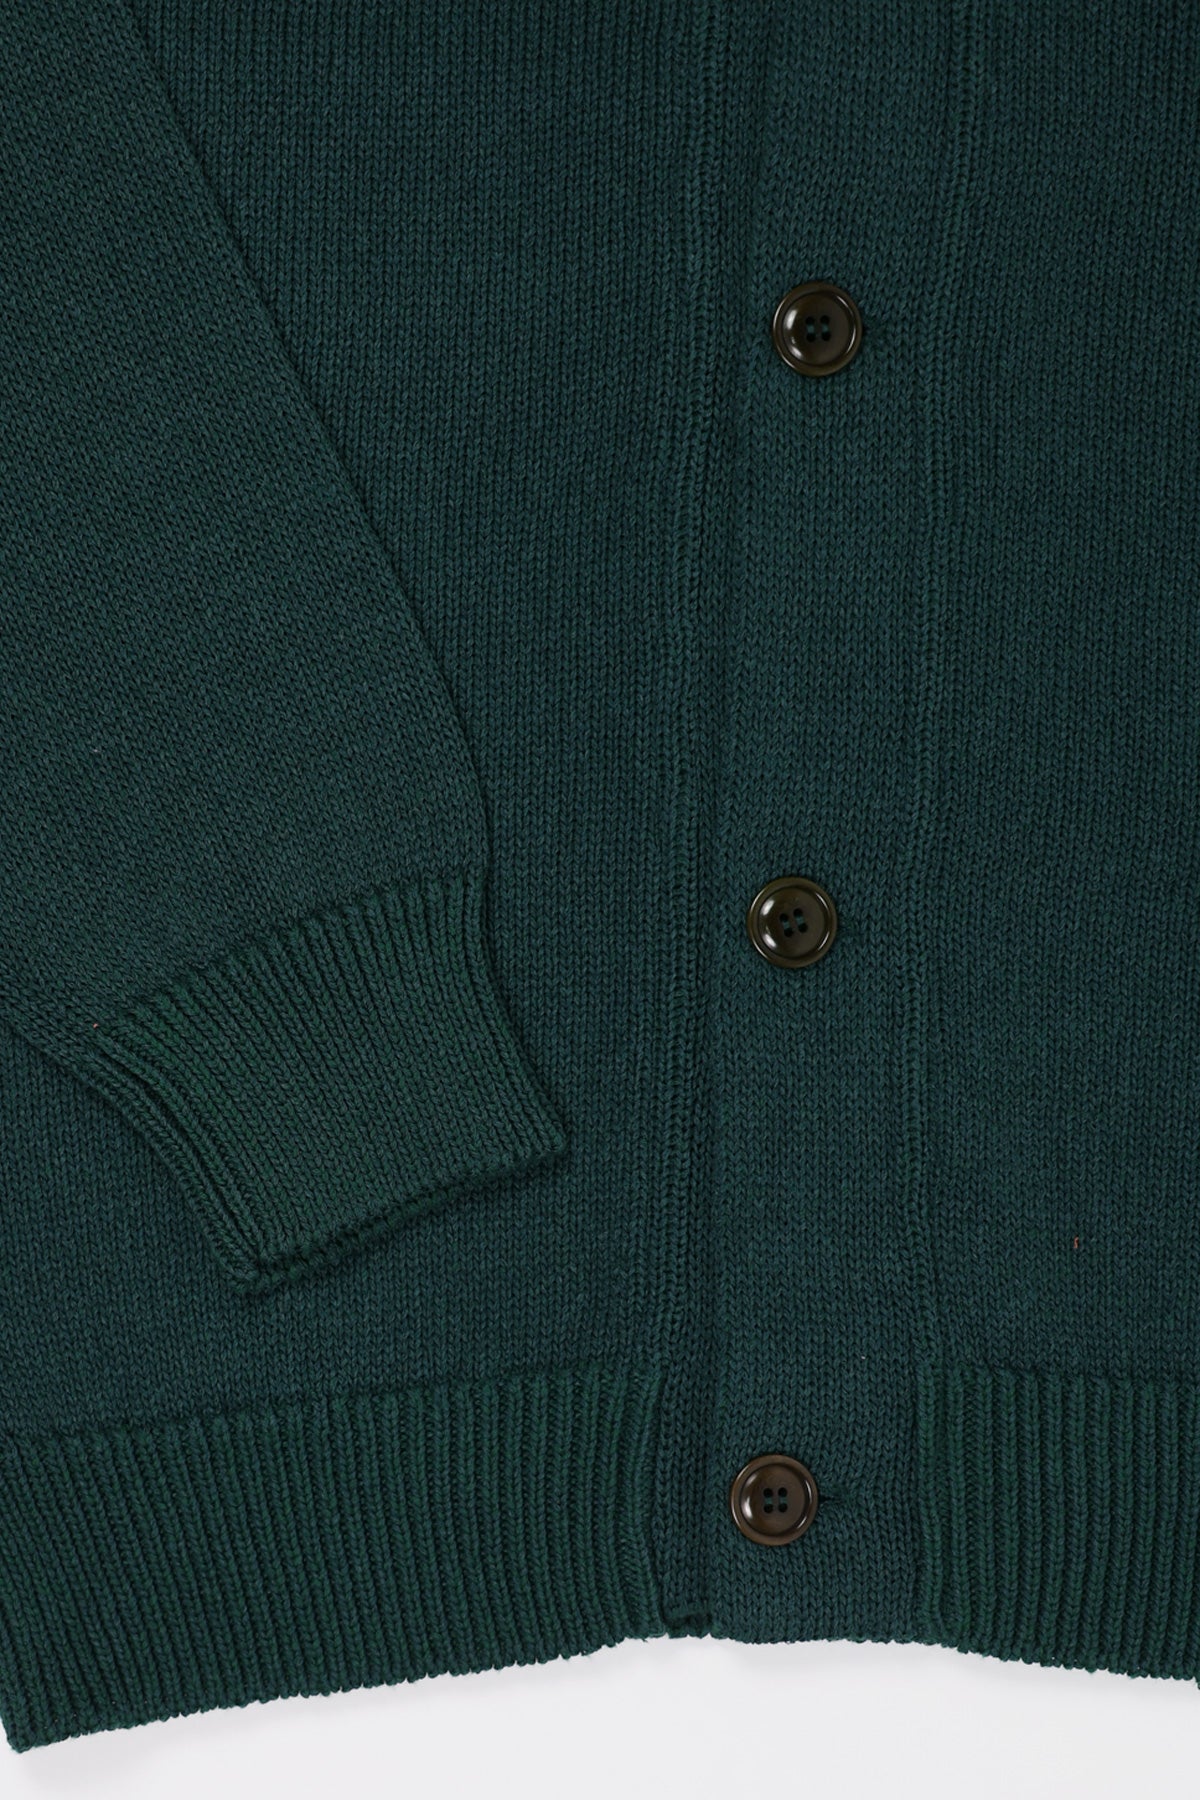 Nanamica Paper Knit Cardigan | Green | Canoe Club